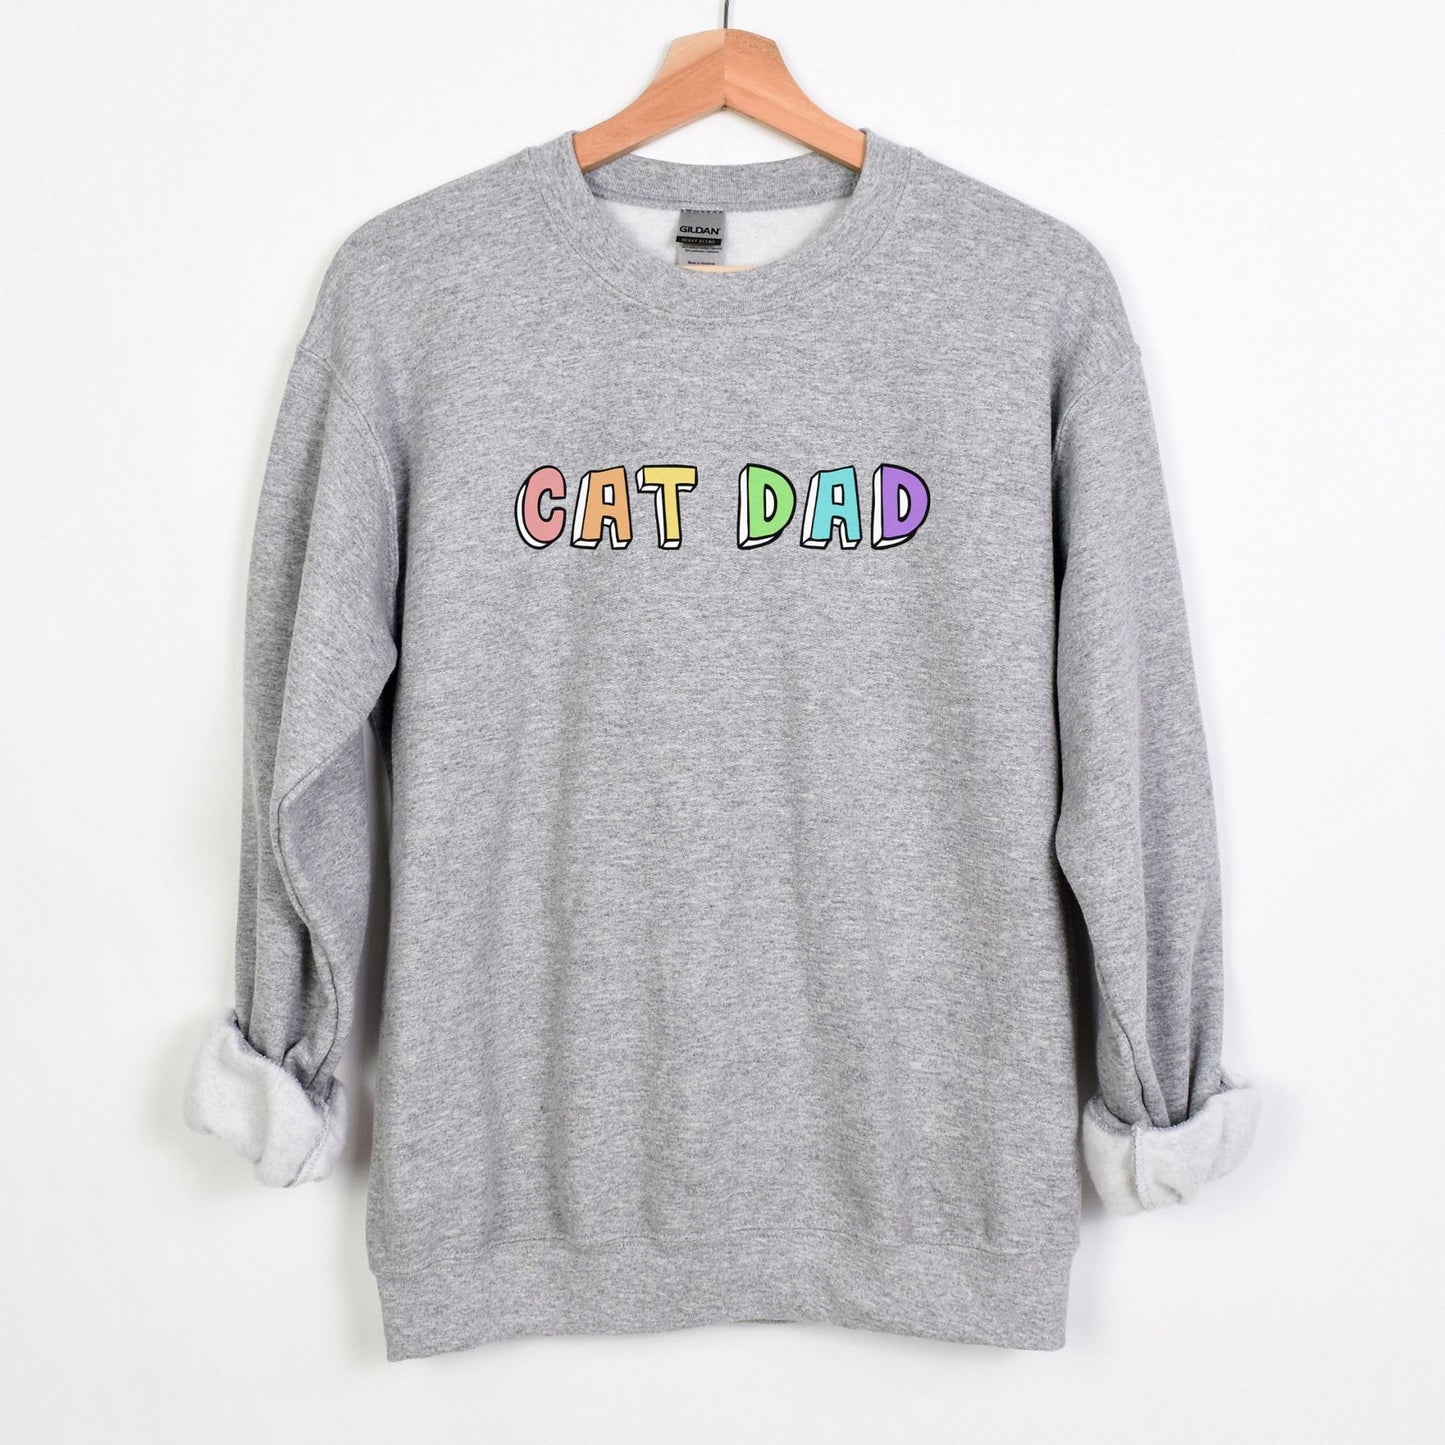 Cat Dad | Crewneck Sweatshirt - Detezi Designs-46292119787734386400